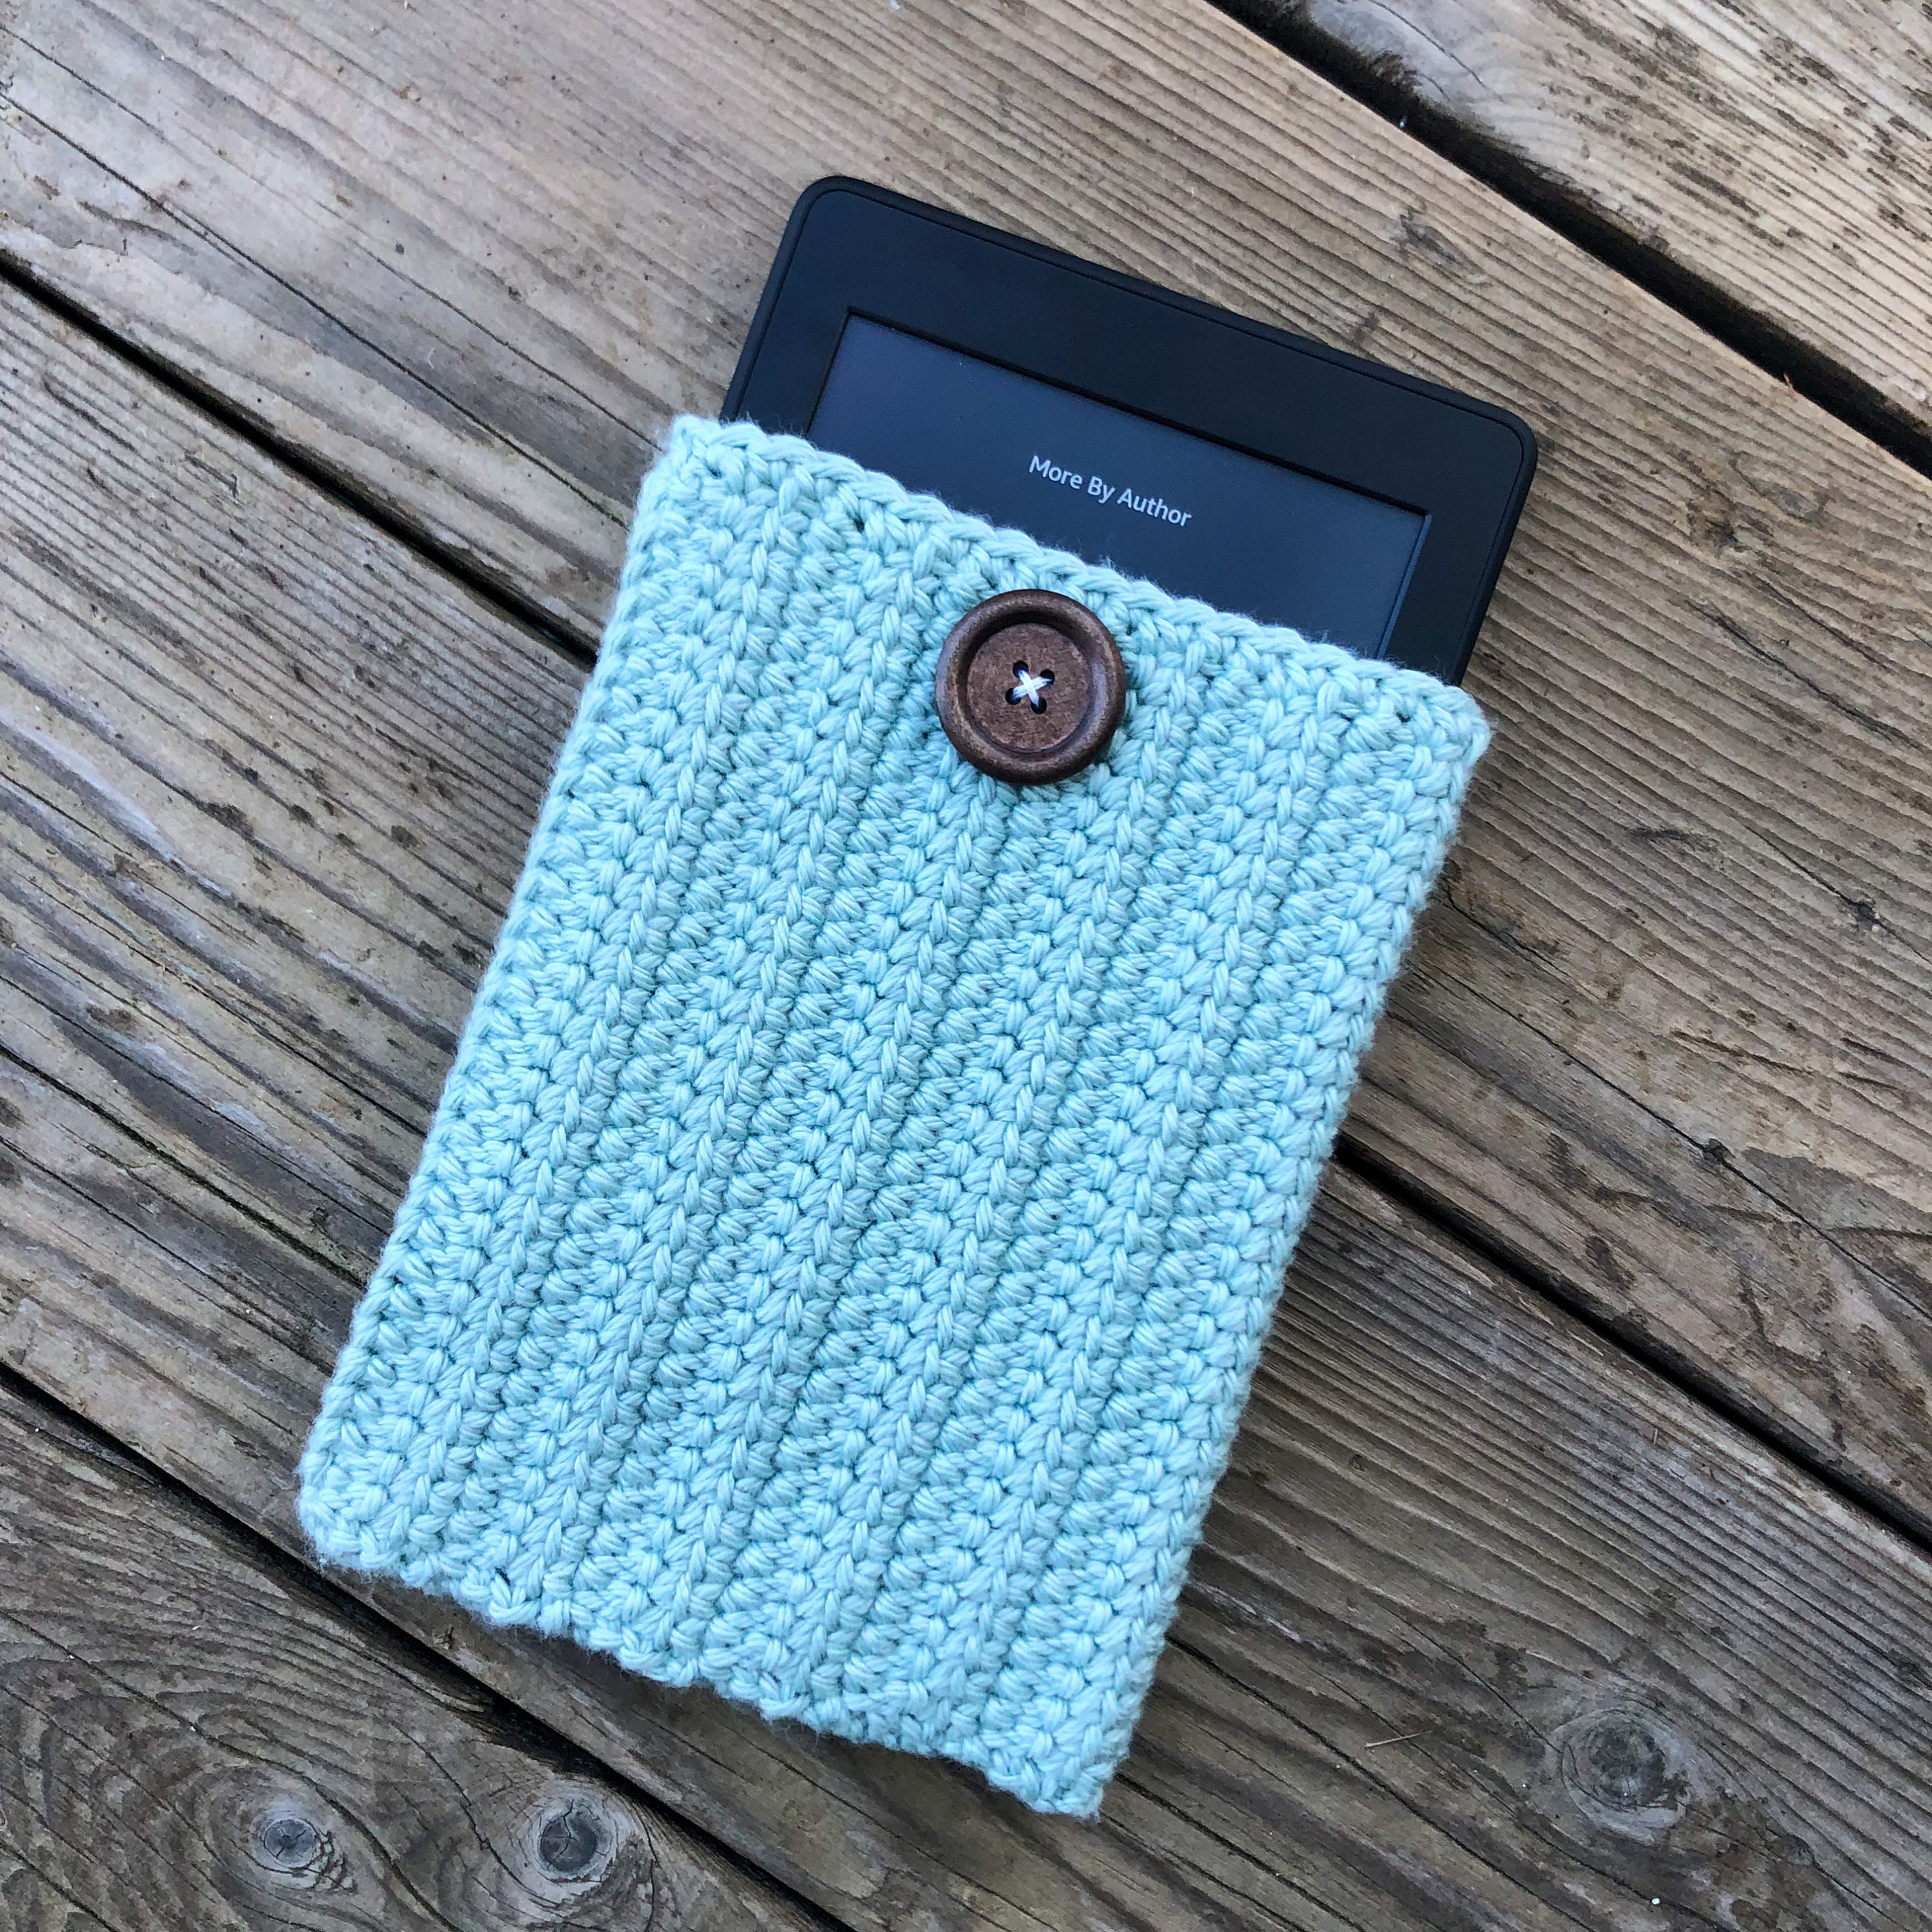 Crochet kindle/book pouch ✨easy & beginner friendly✨ 